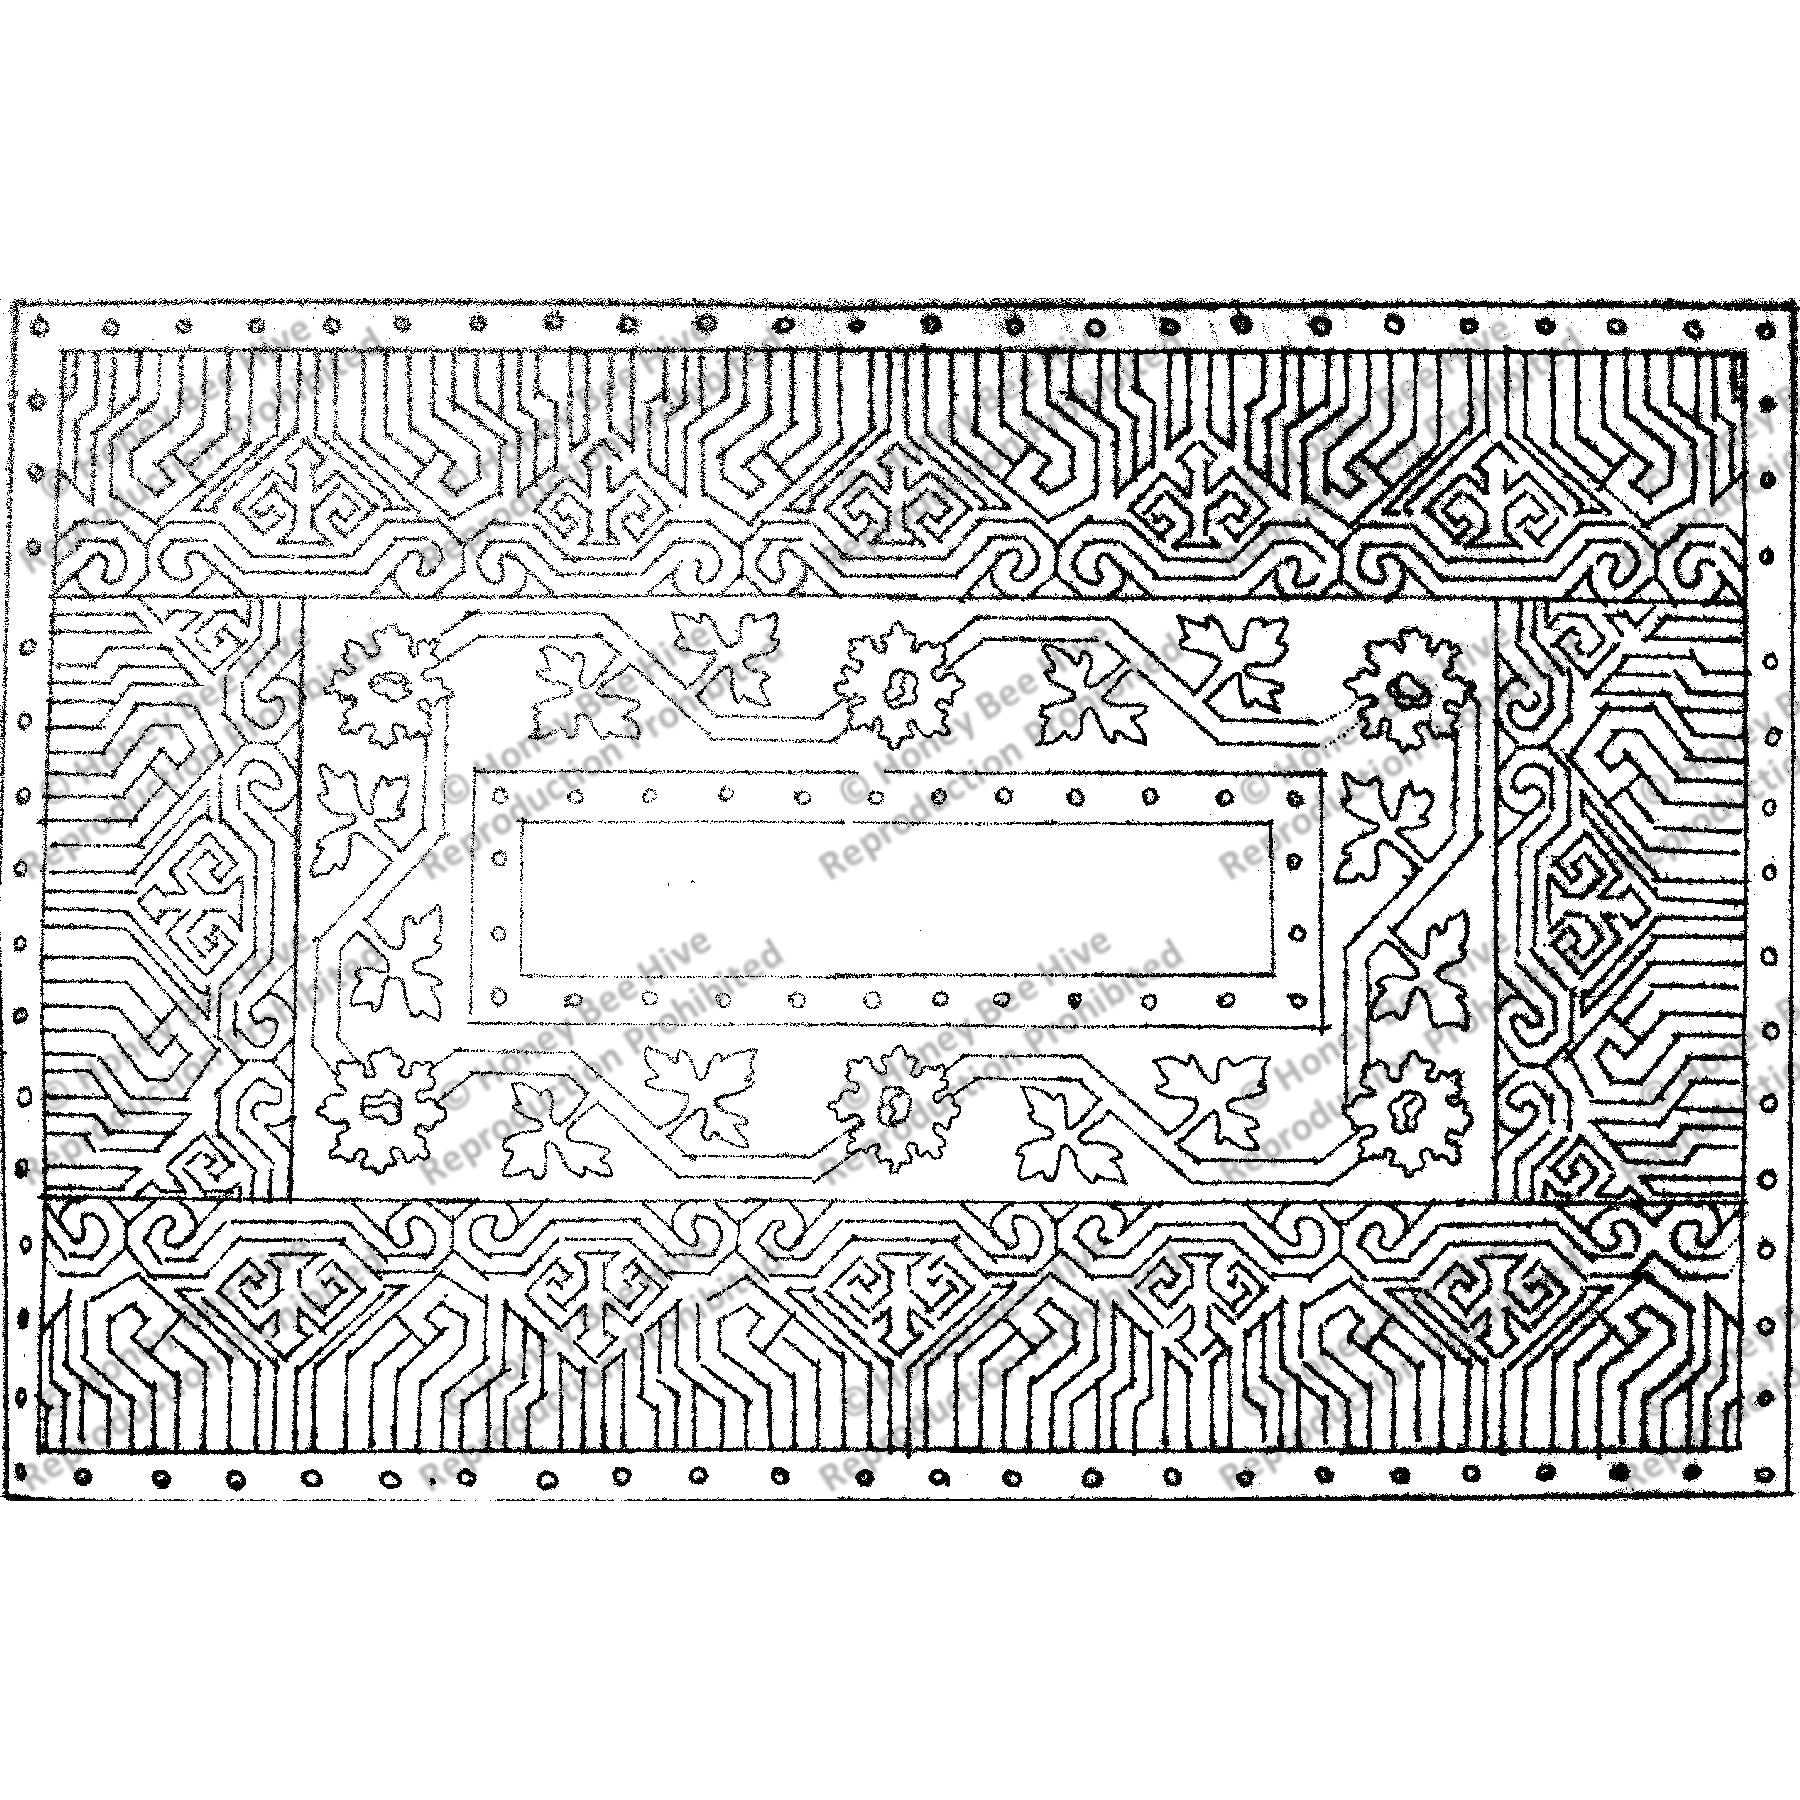 Little Samarkand, rug hooking pattern